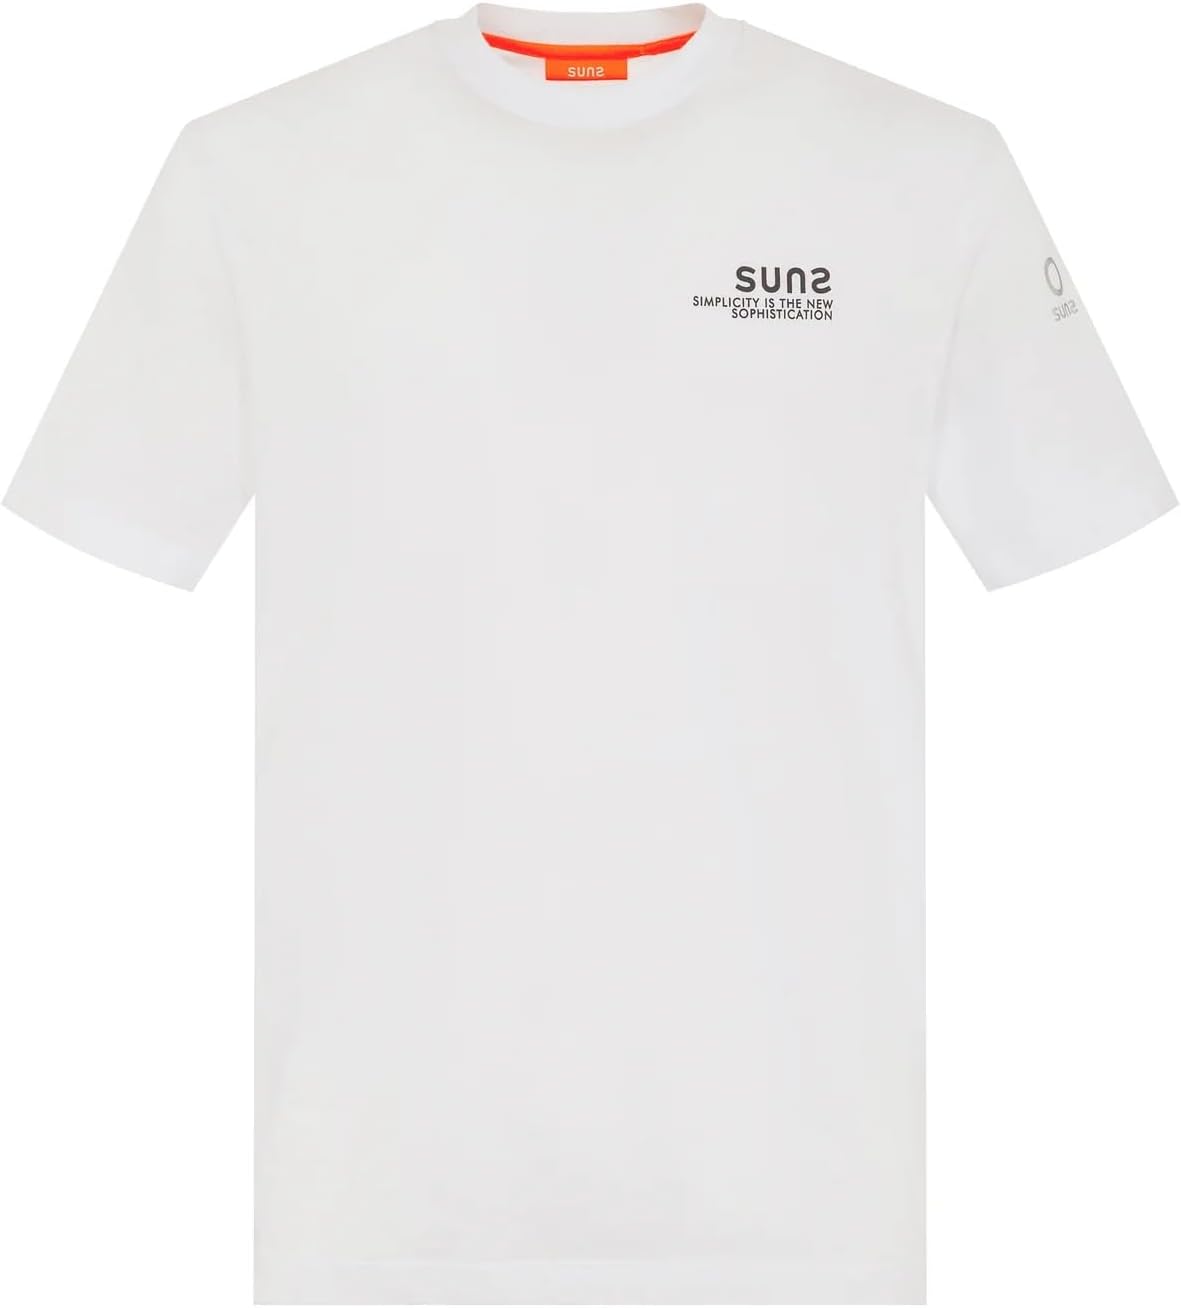 SUNS T-shirt Uomo - Bianco modello TSS41010U